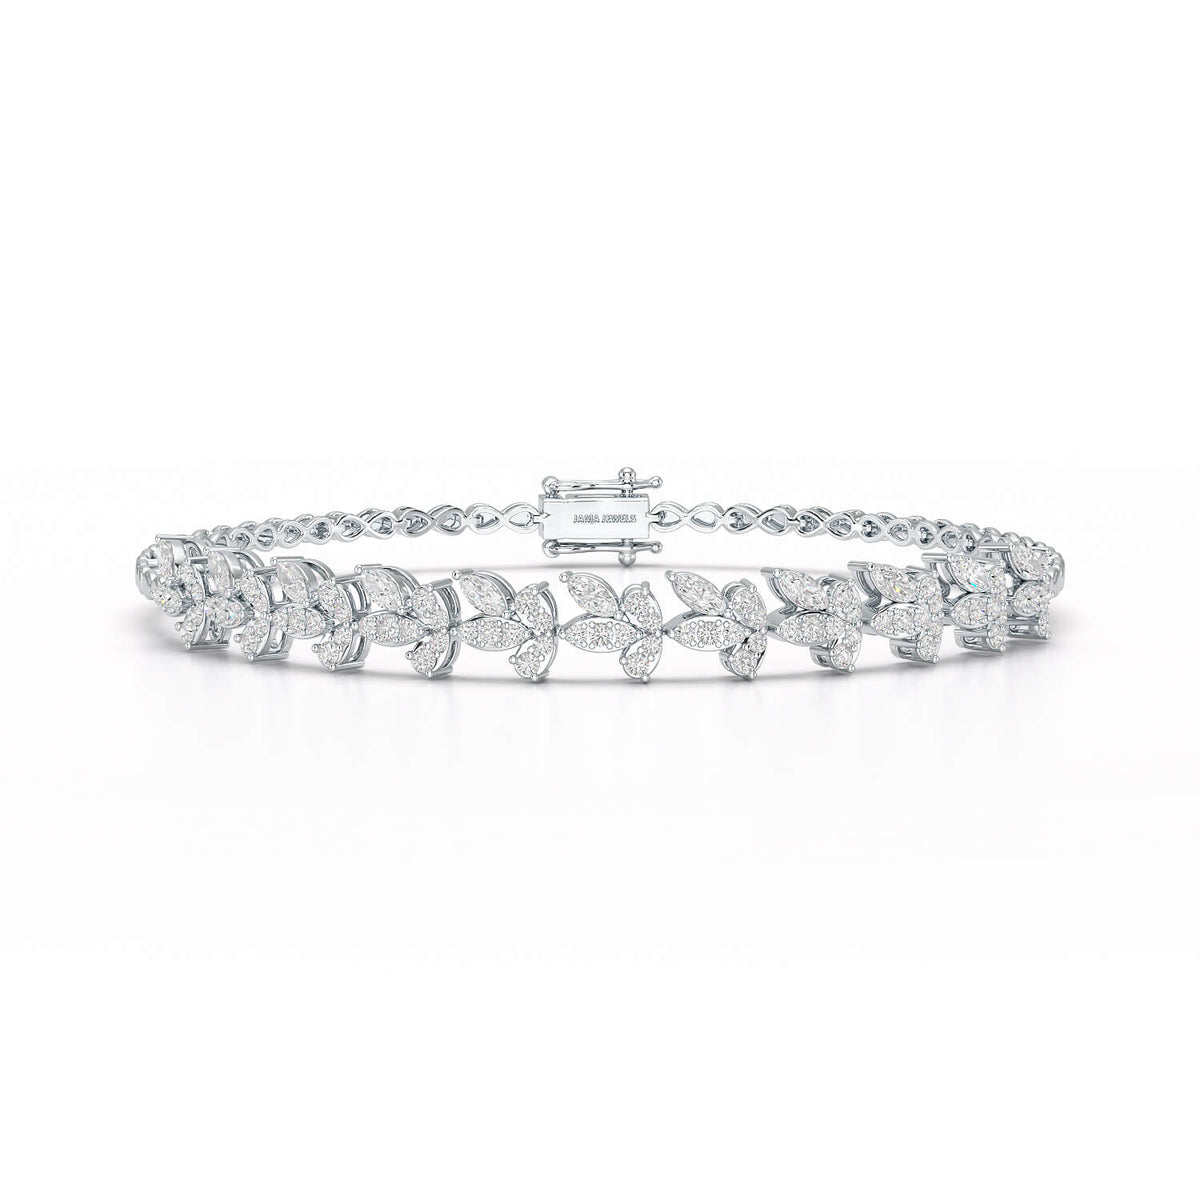 1.95 CT Marquise Cut Diamond Lab Created Bracelet